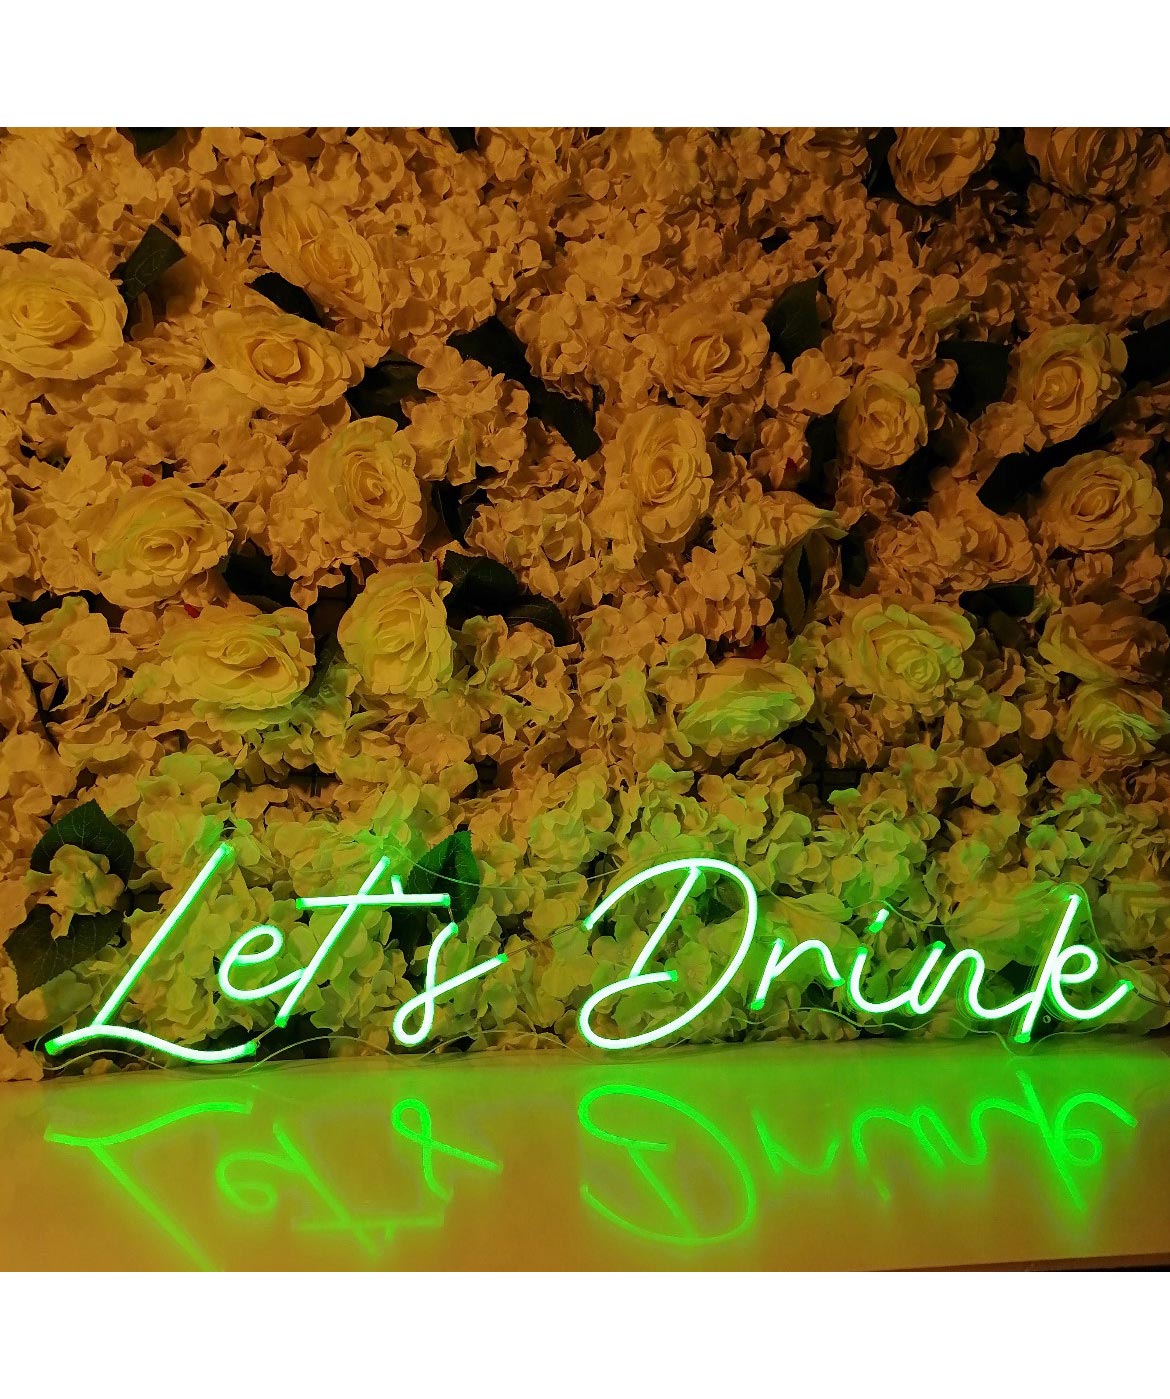 Neon light «ANeon» Let's Drink, 60 x 10 cm